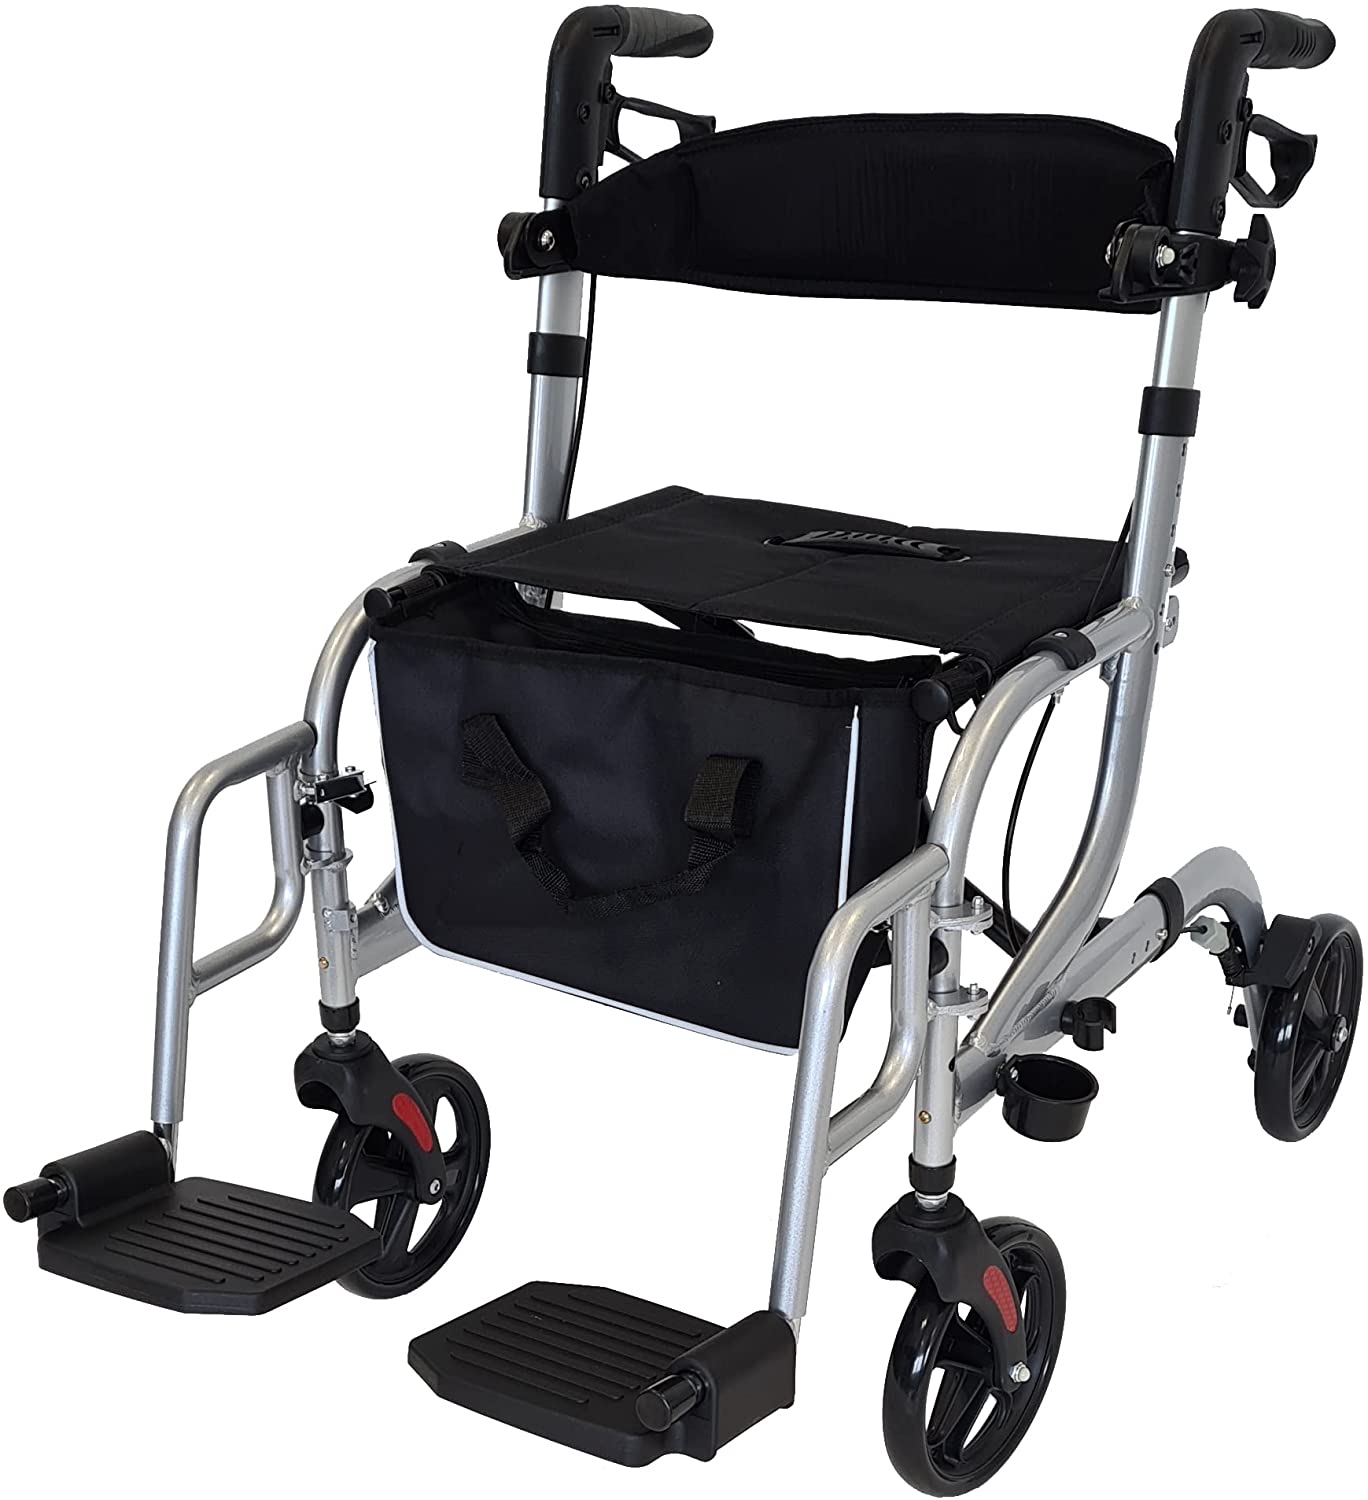 ABC home Lightweight Folding Aluminium Wheelchair Walking Frame with Bag